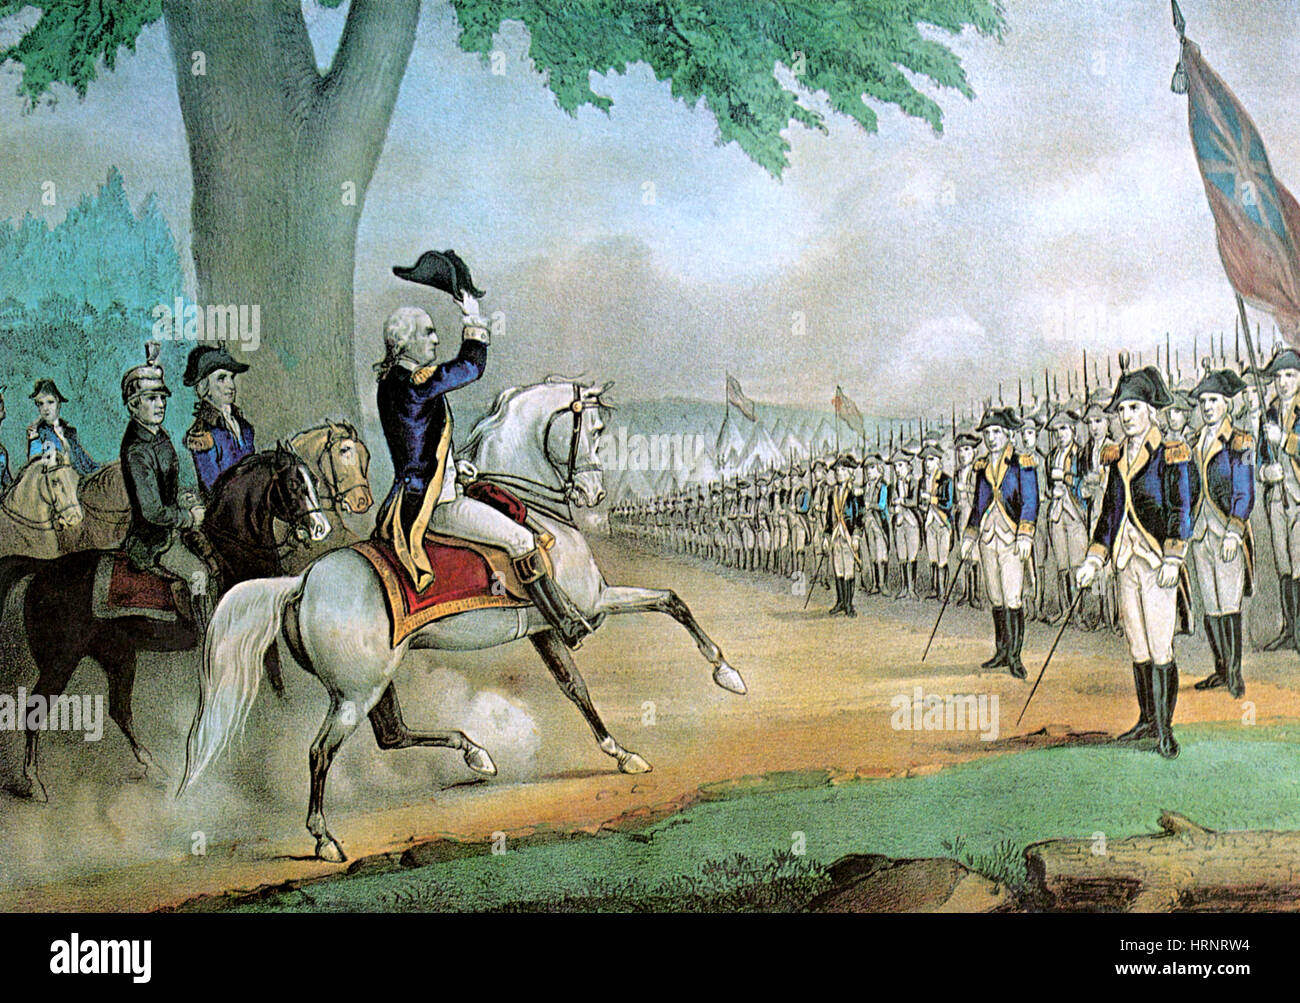 George Washington Taking Command of Army, 1775 Stock Photo